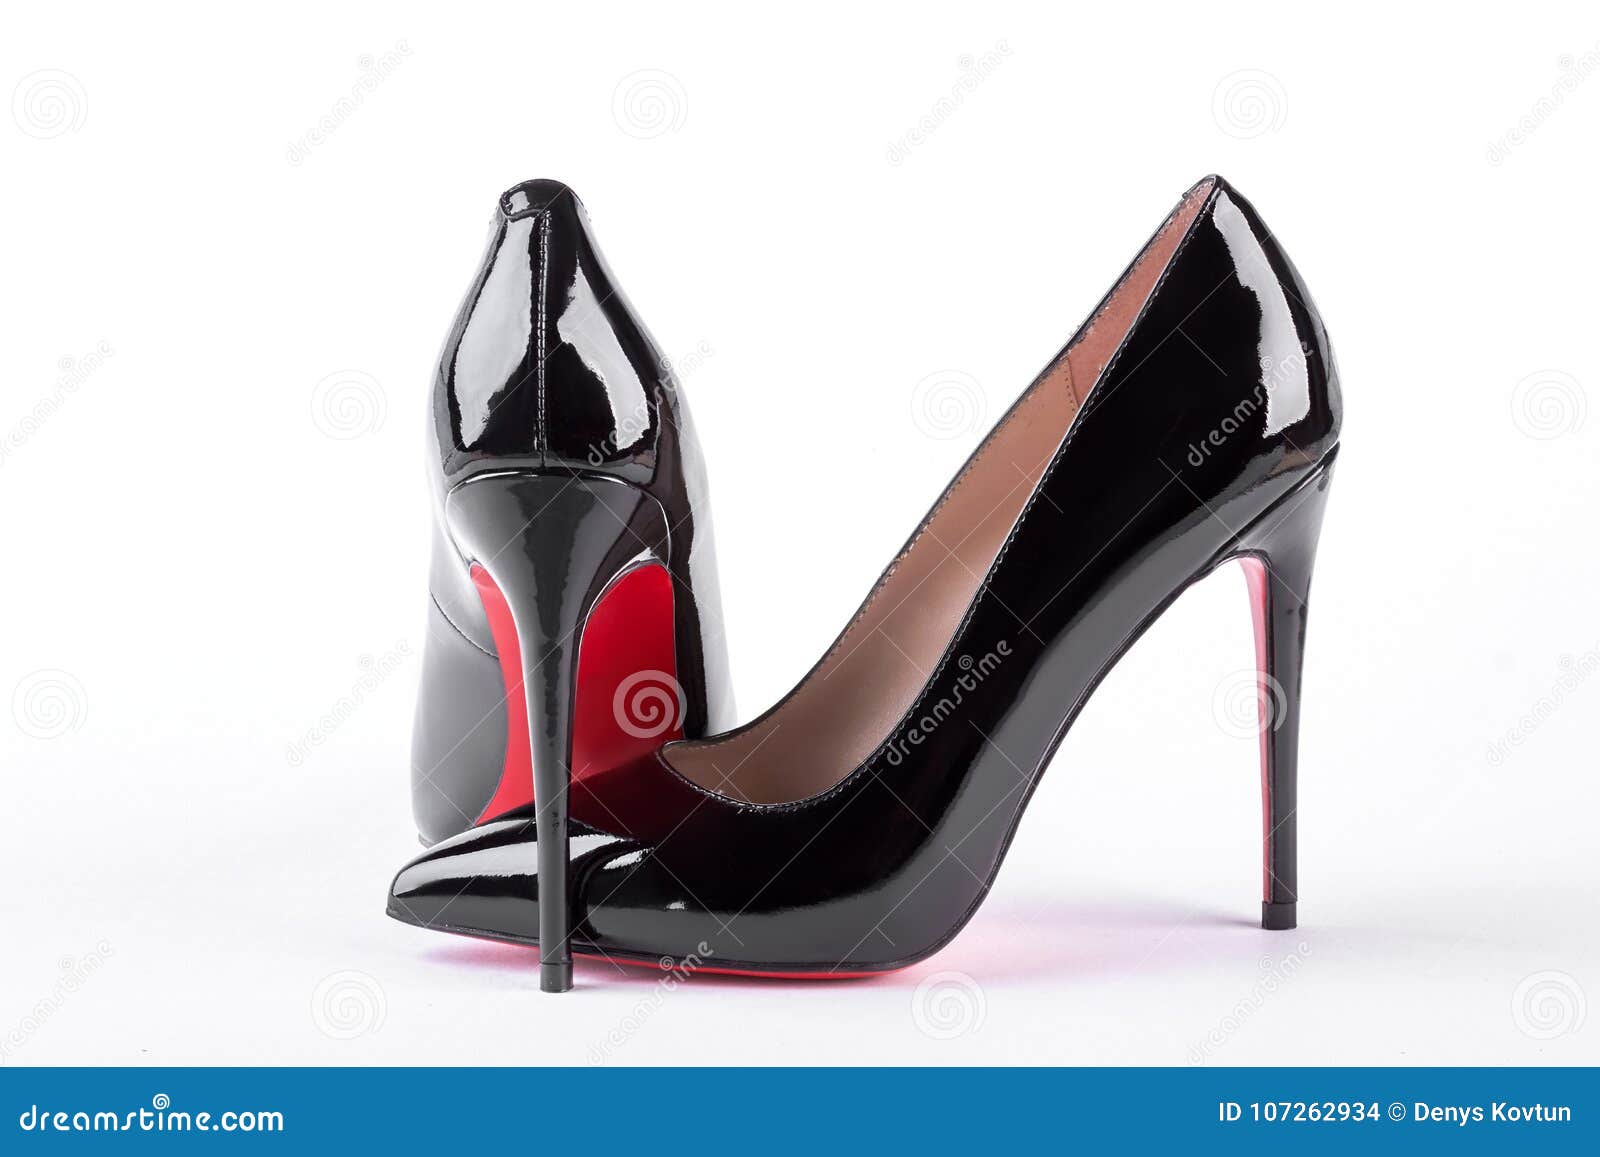 classic black louboutin heels